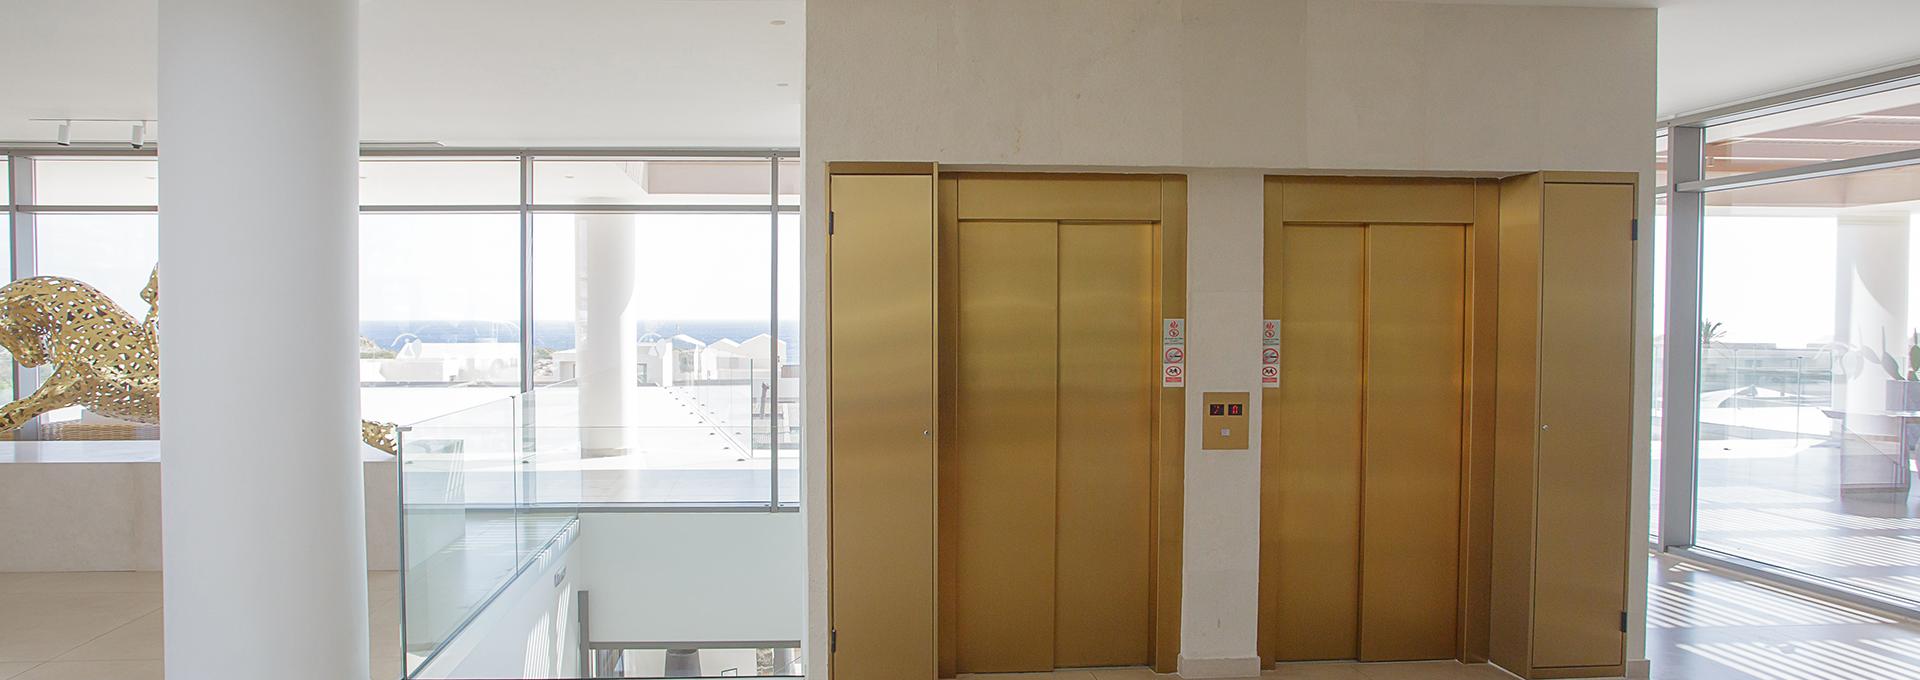 Robinson Elevator